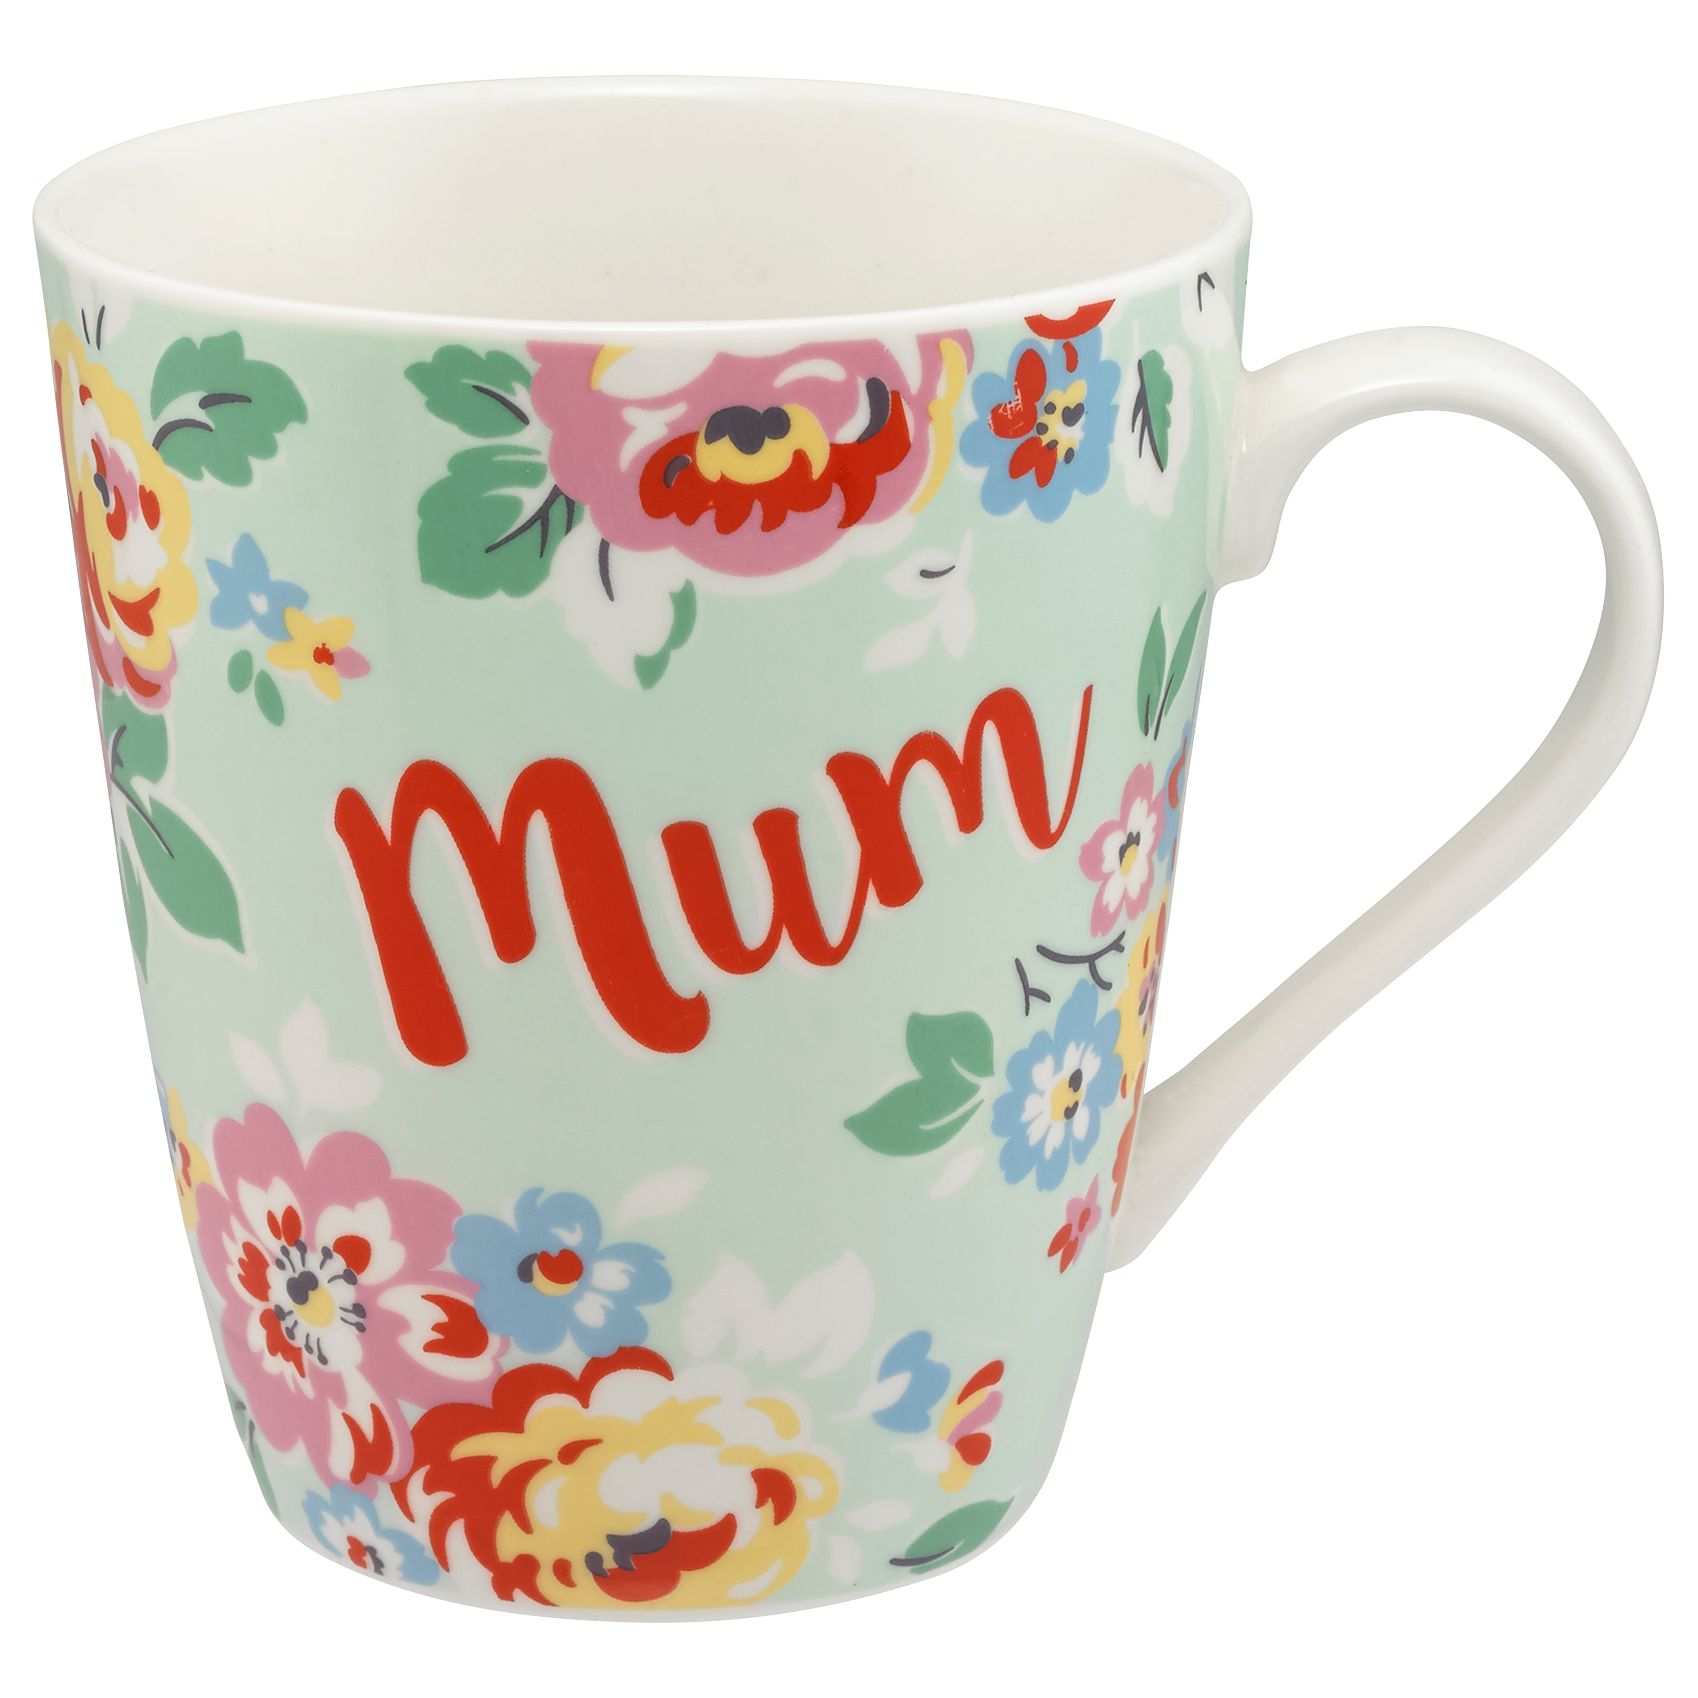 Cath Kidston Wells Rose Mum Mug, Soft Mint, 475ml